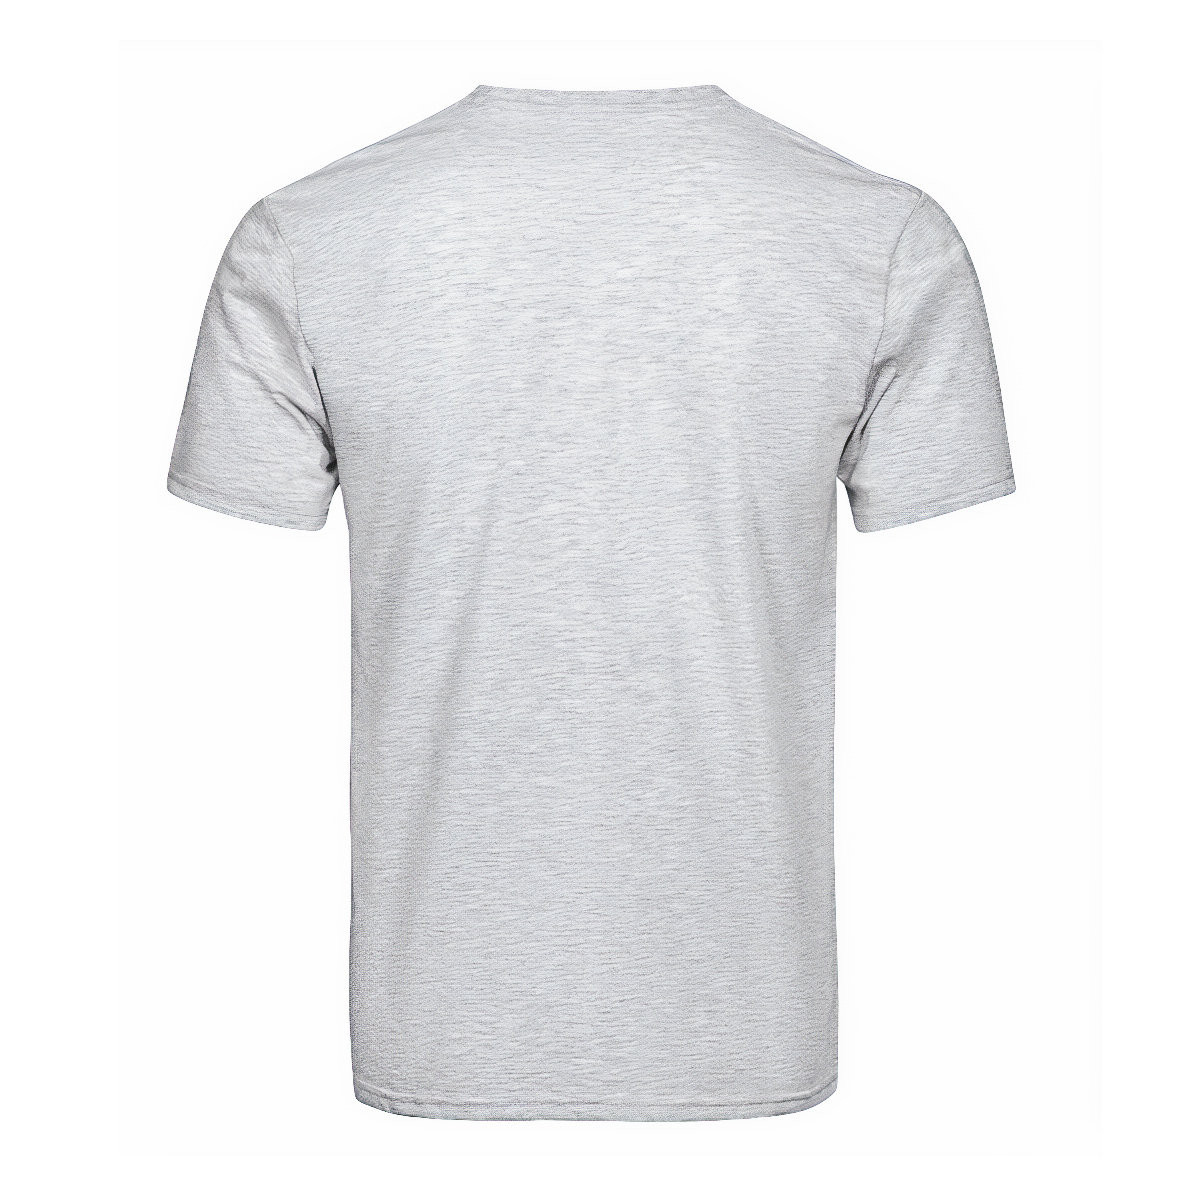 Ged Tartan Crest T-shirt - I'm not yelling style